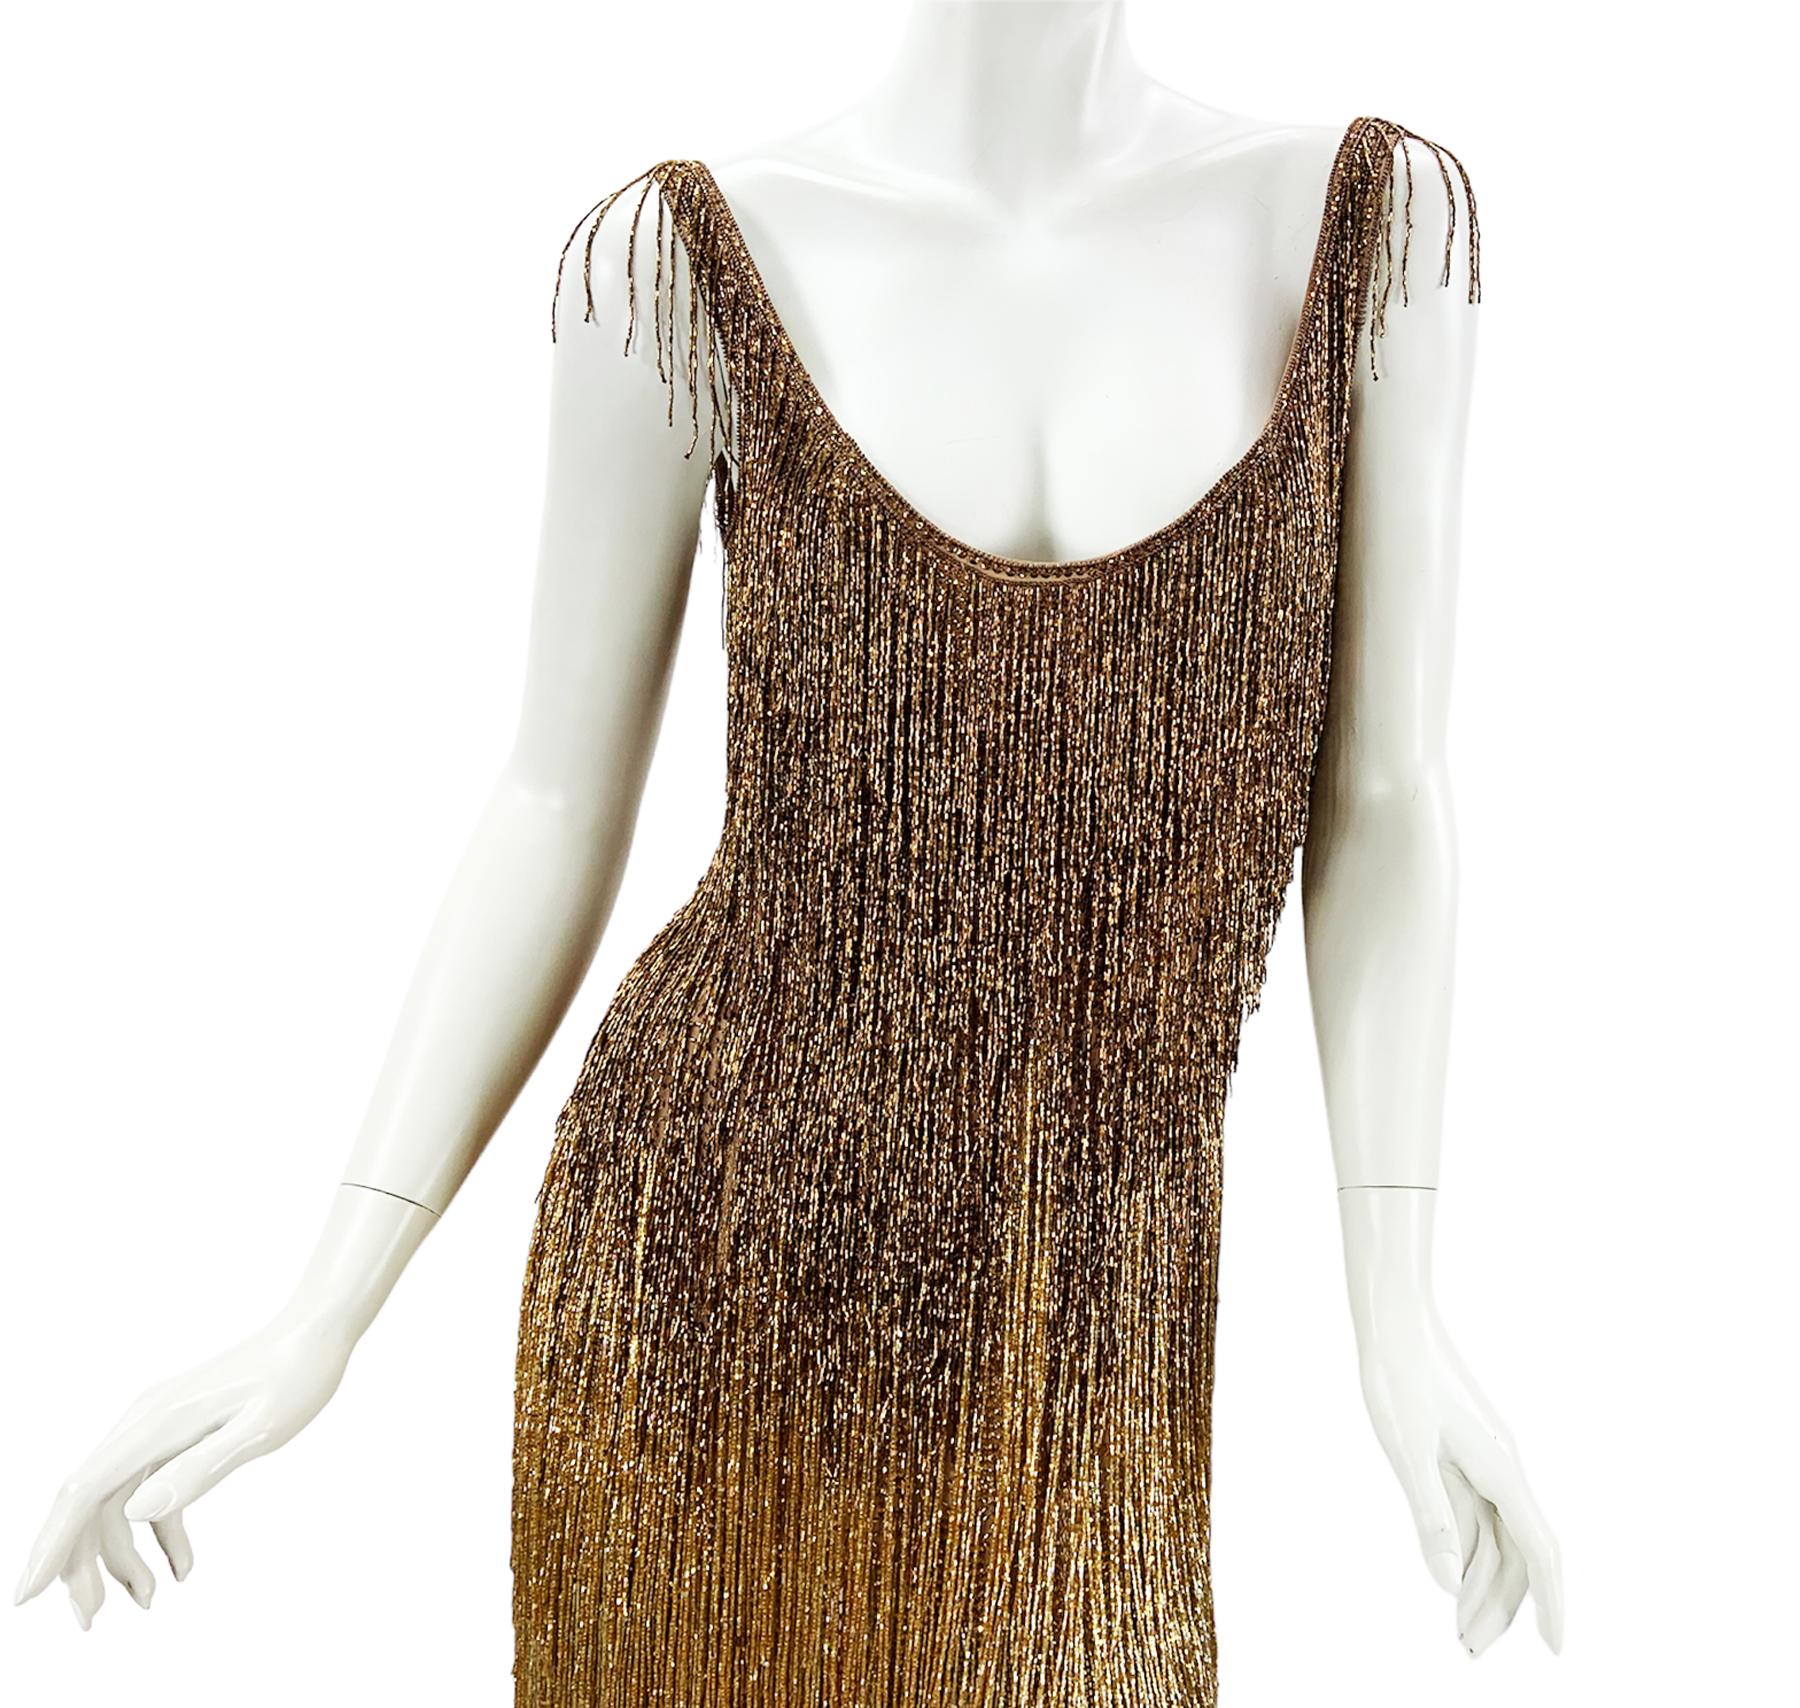 Iconic MUSEUM Roberto Cavalli Fringe Beaded Dress as seen on TAYLOR SWIFT It. 40 4